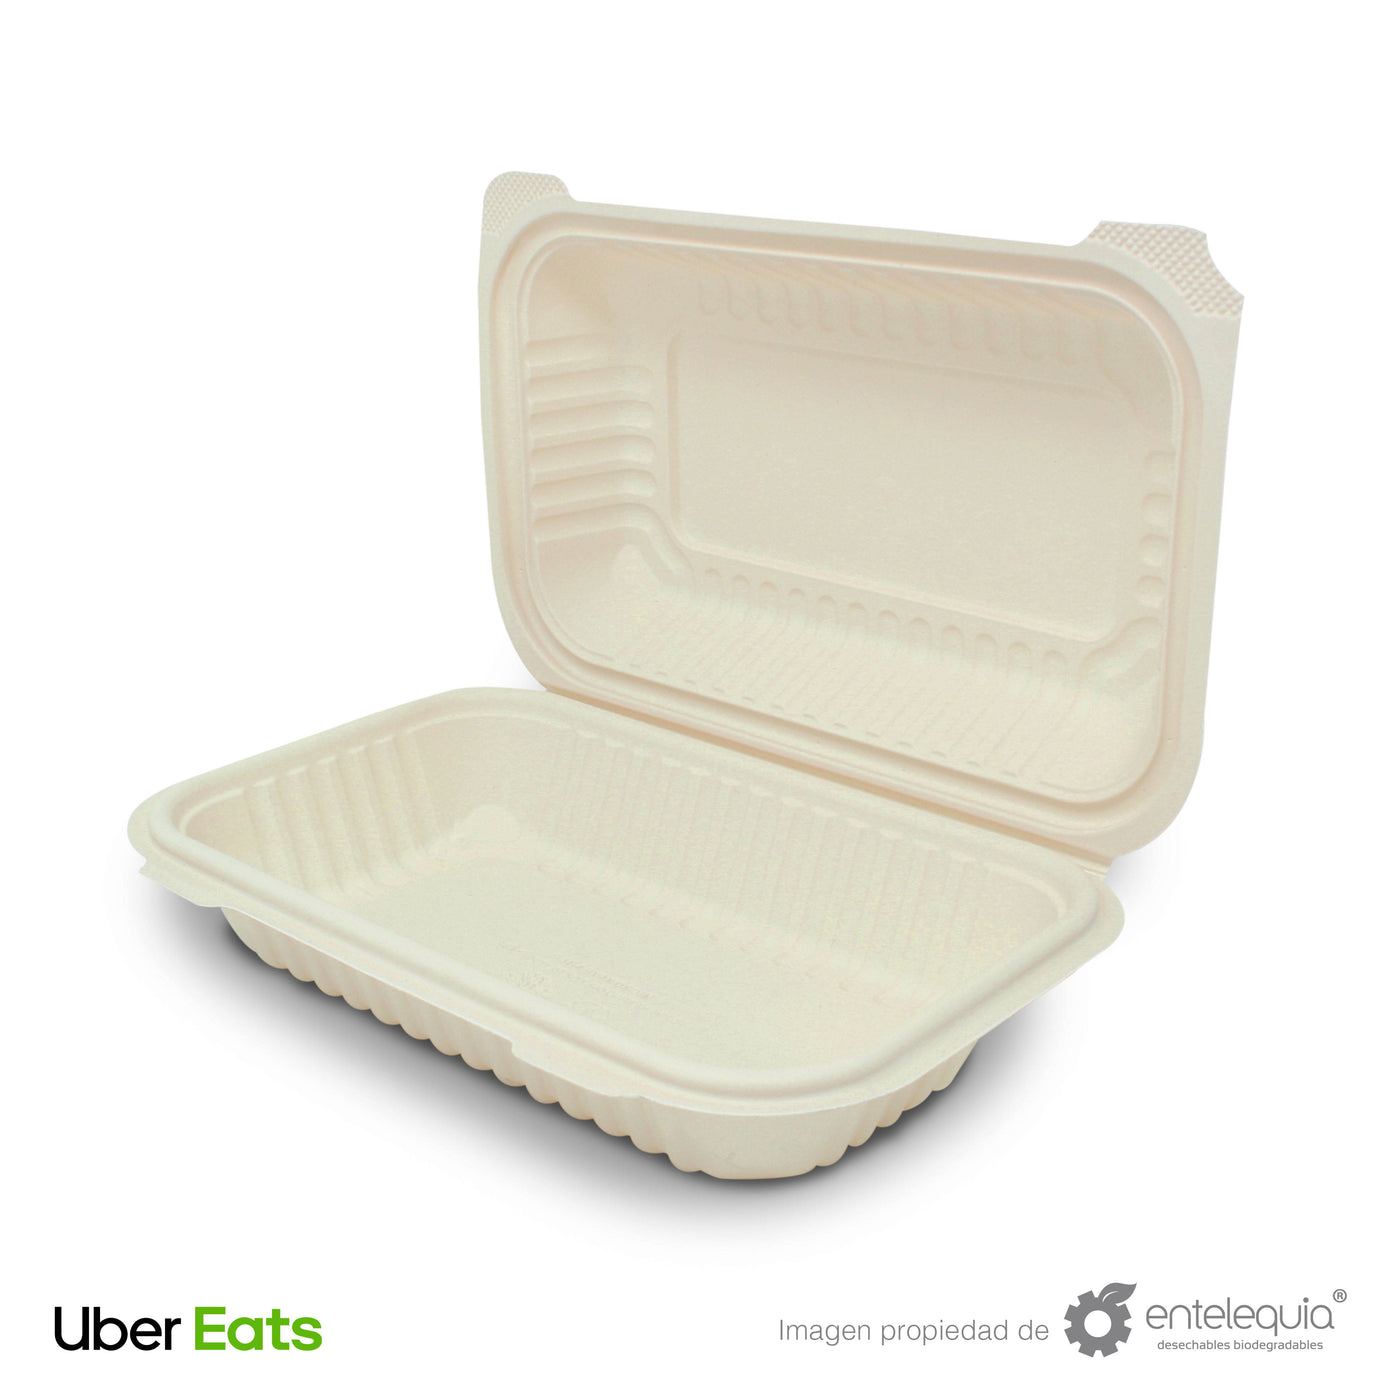 Bolsa #20 – Entelequia® Desechables Biodegradables